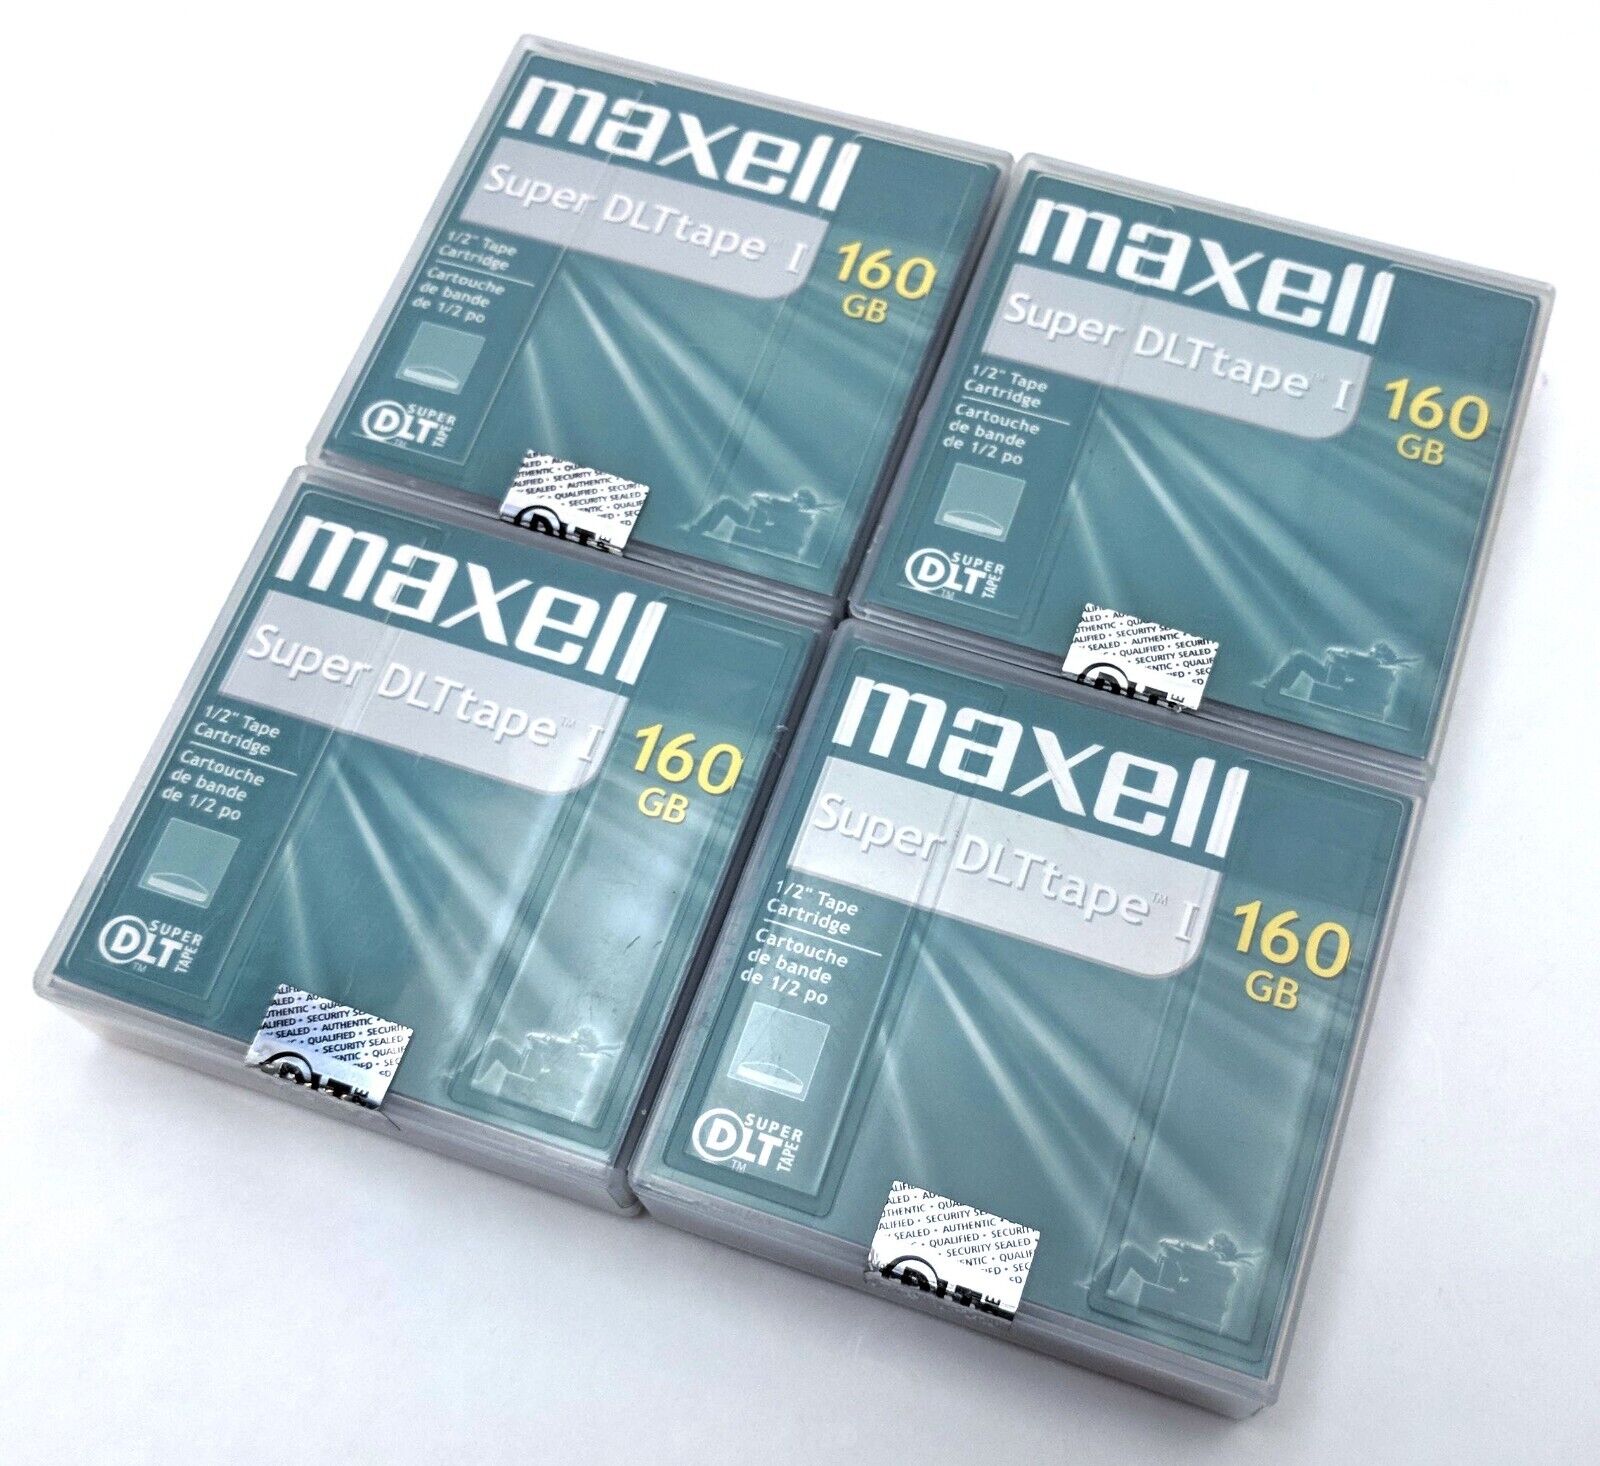 Lot of 4 NEW Maxell Super DLT Tape I 160GB Data 1/2\